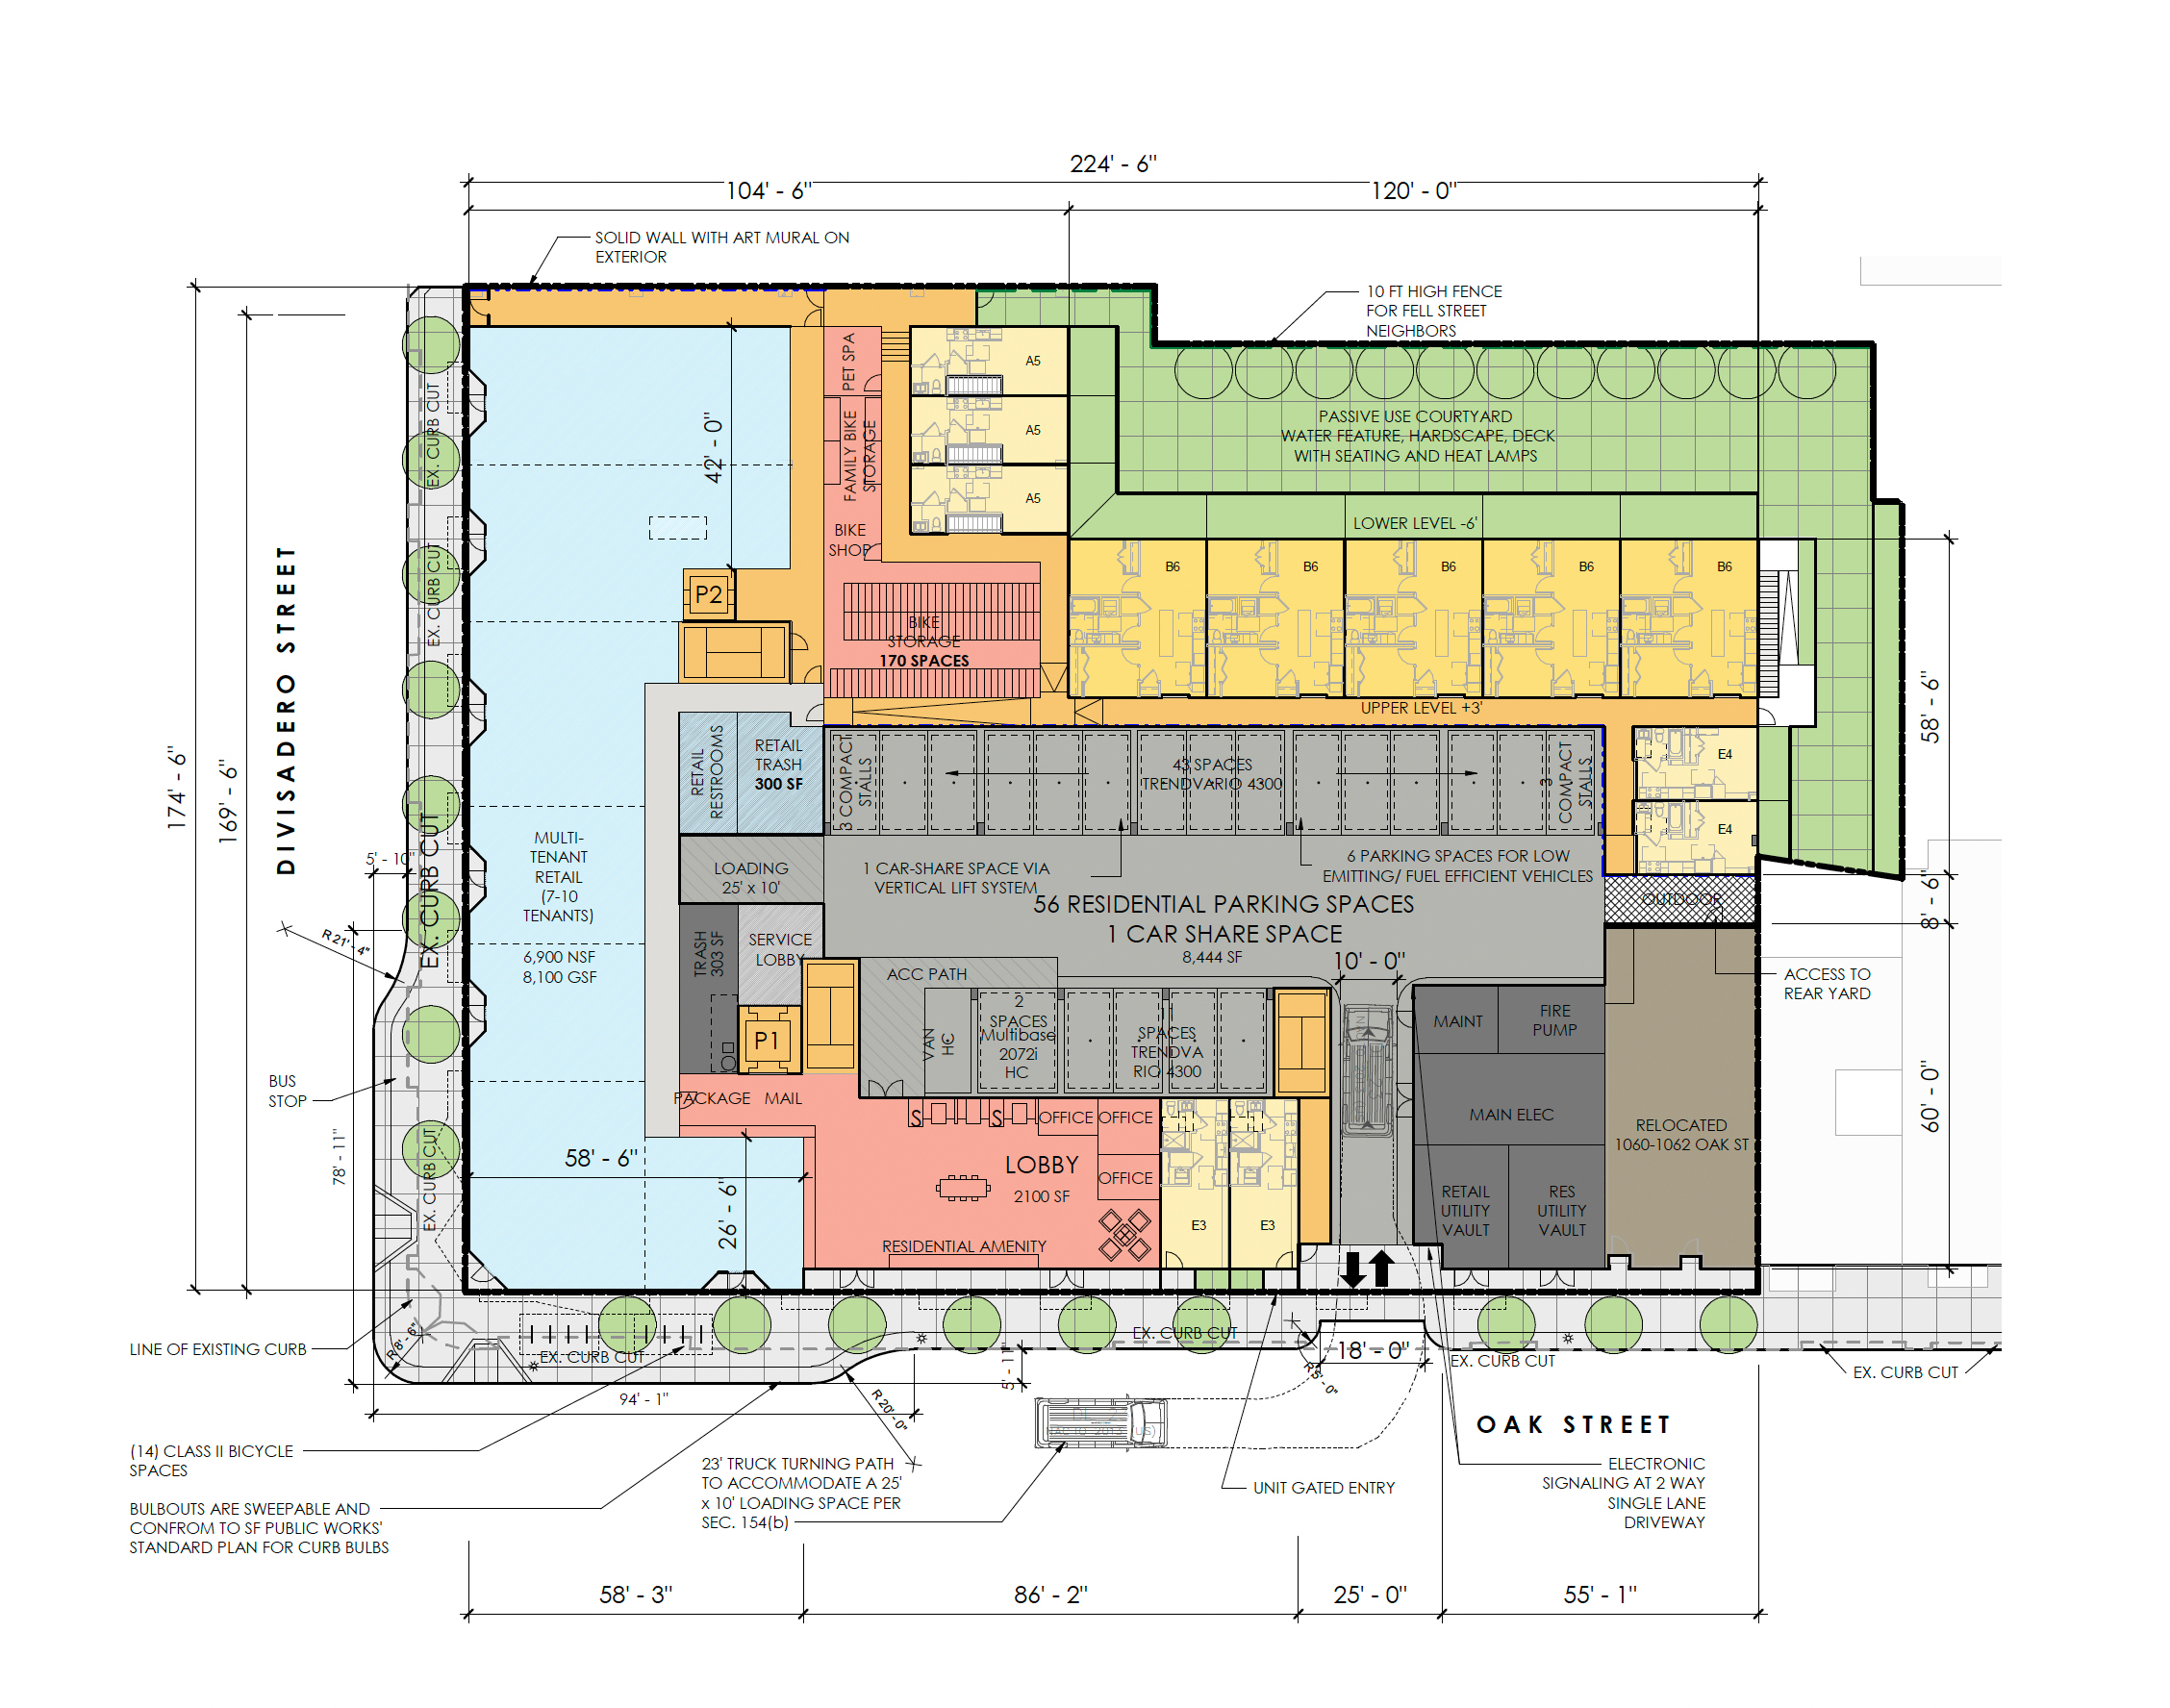 400 Divisadero Street floor plan, illustration by BDE Architecture